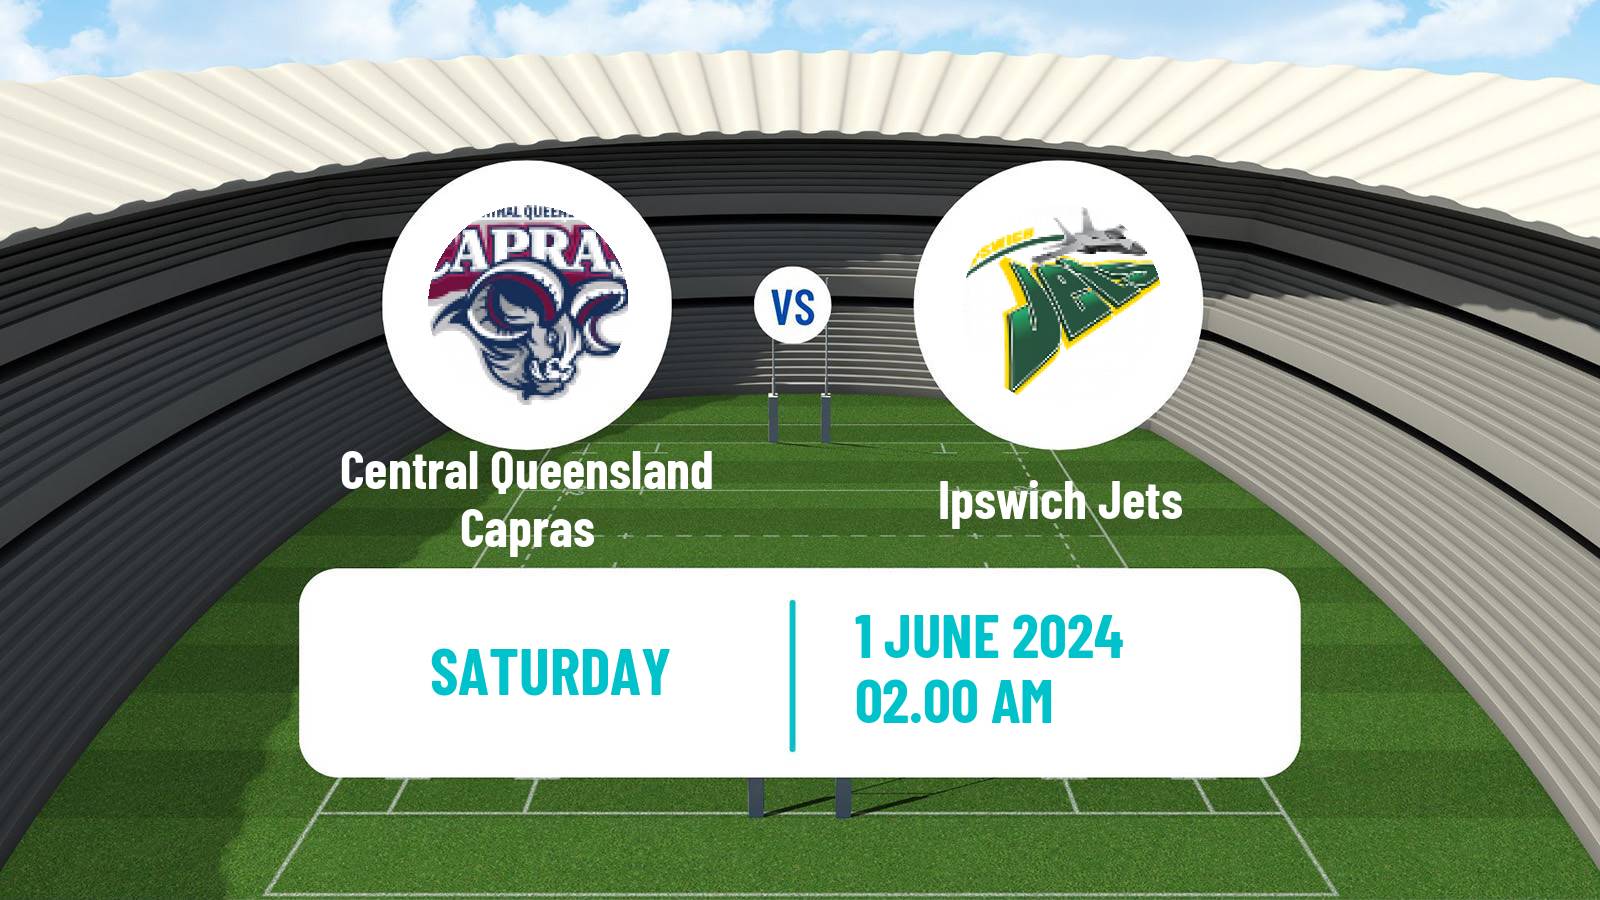 Rugby league Australian Queensland Cup Central Queensland Capras - Ipswich Jets